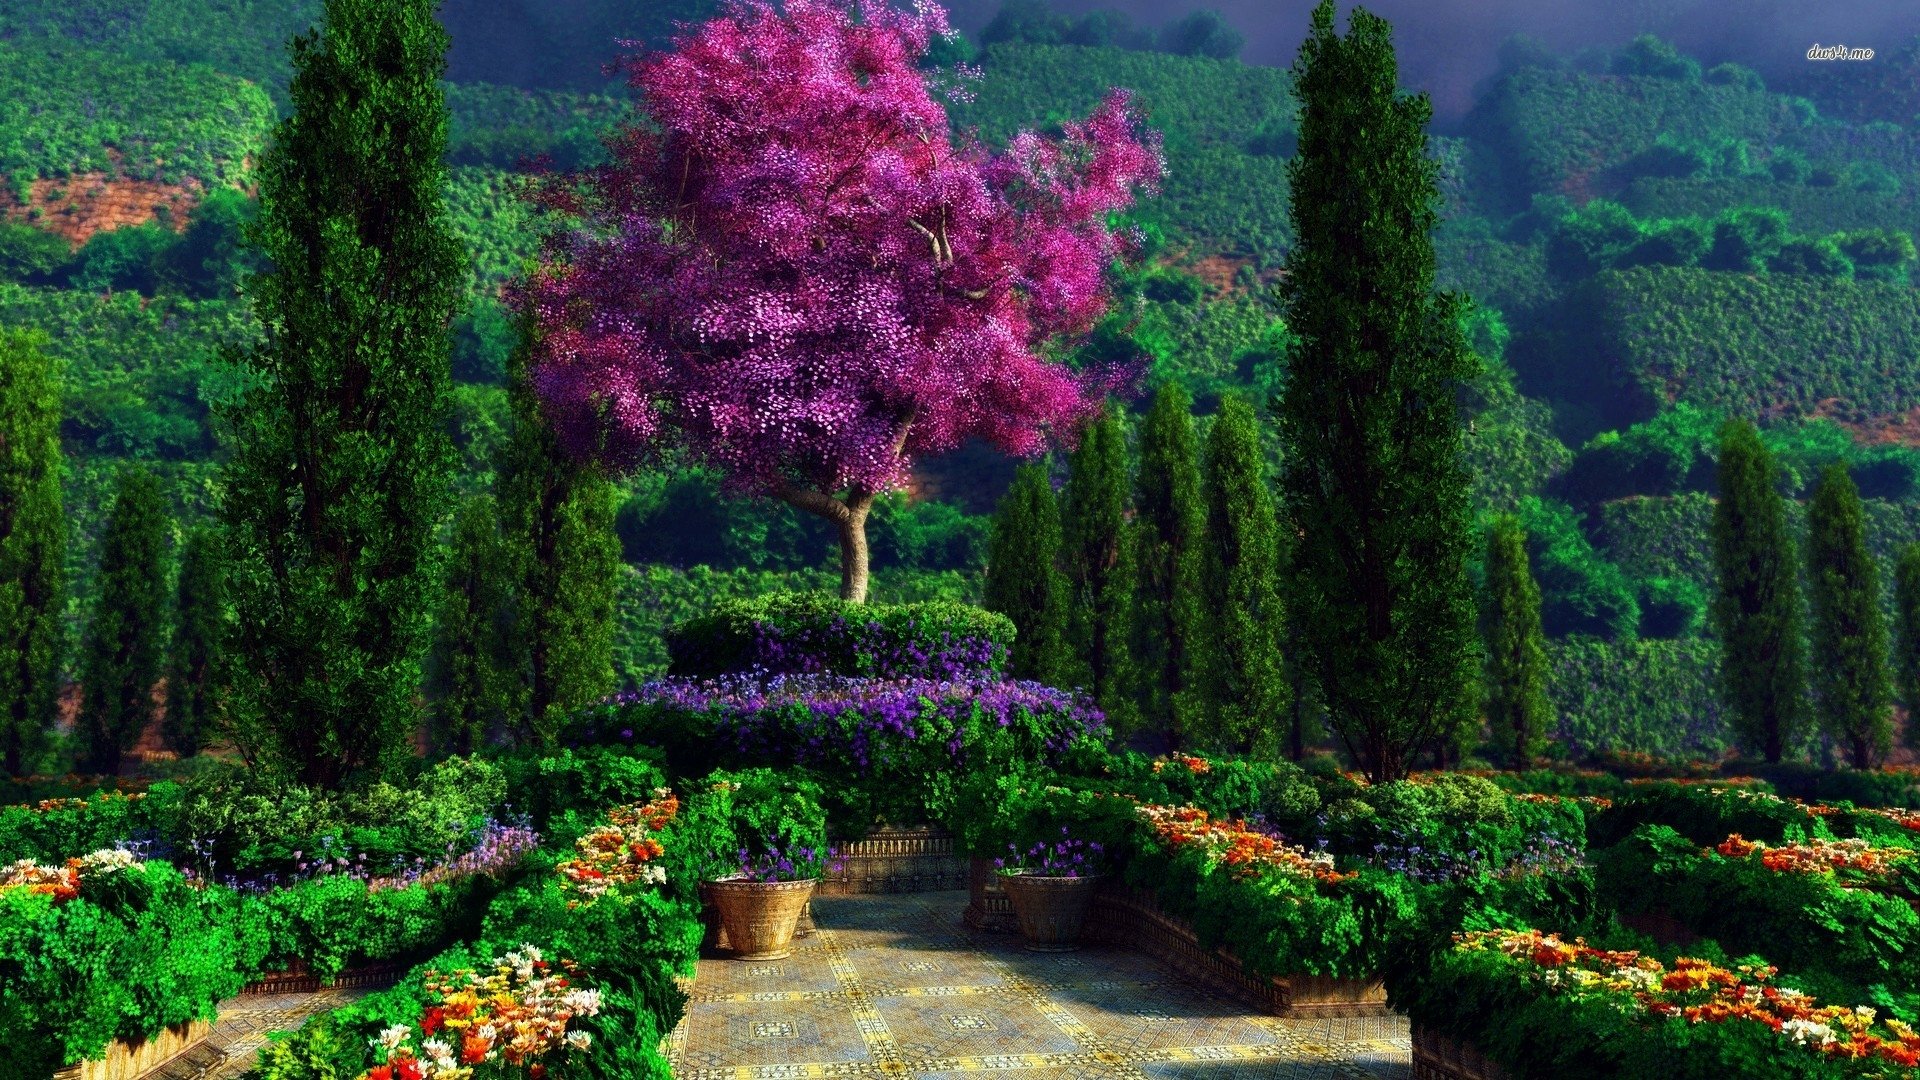 Garden HD Wallpaper | Background Image | 1920x1080 | ID ...